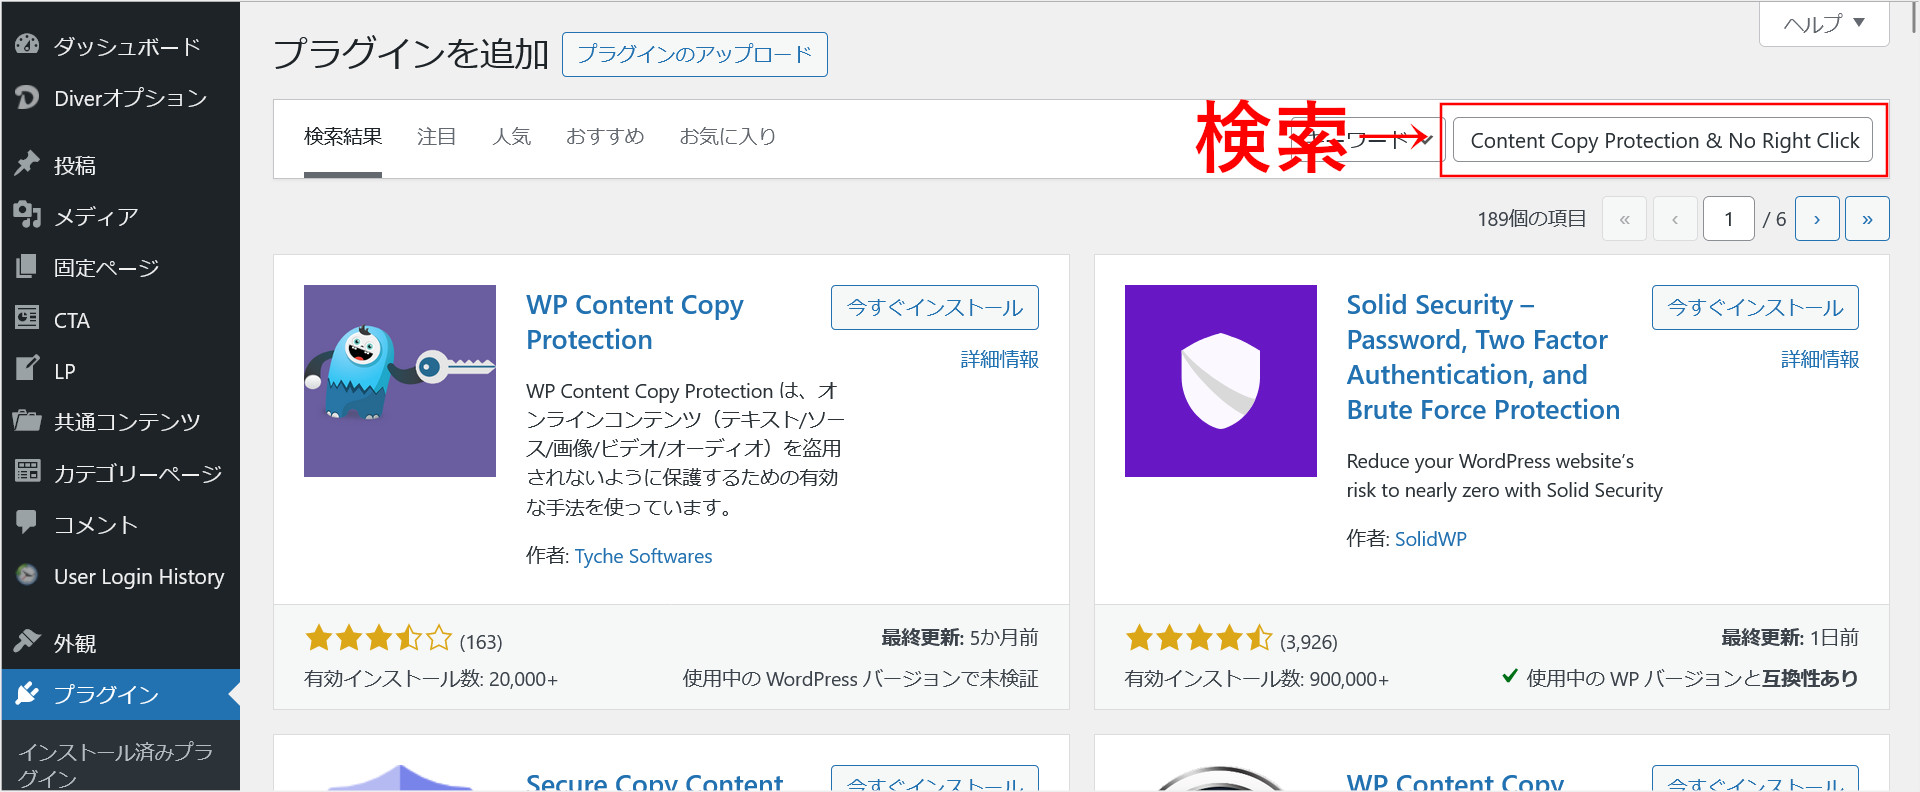 WP Content Copy Protection & No Right Clickを検索